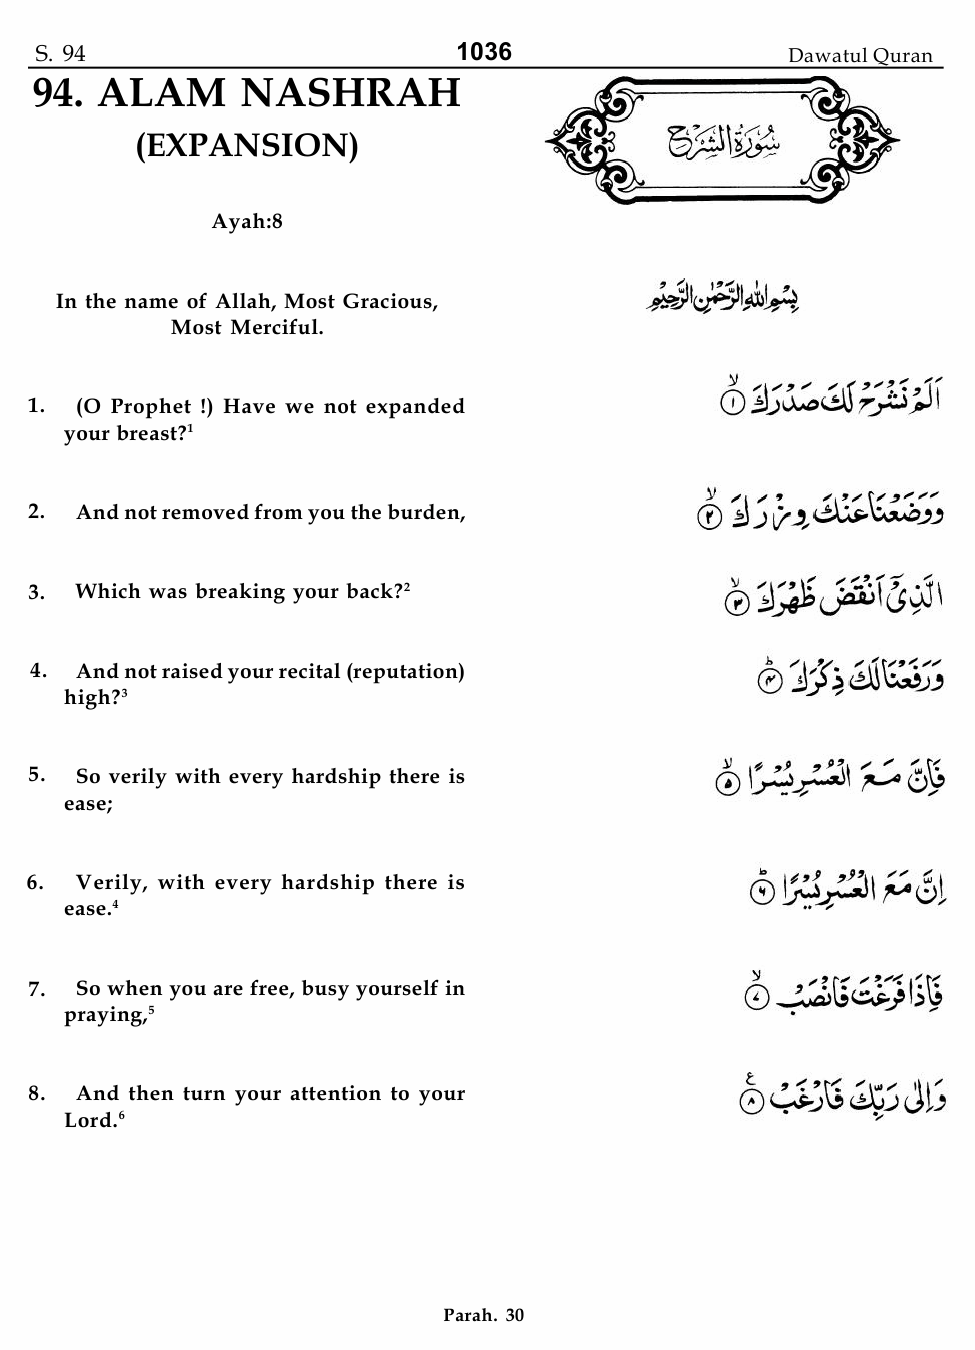 Surah Al-Sharh 94:1-8 - Dawat ul Quran - Quran Translation and Commentary